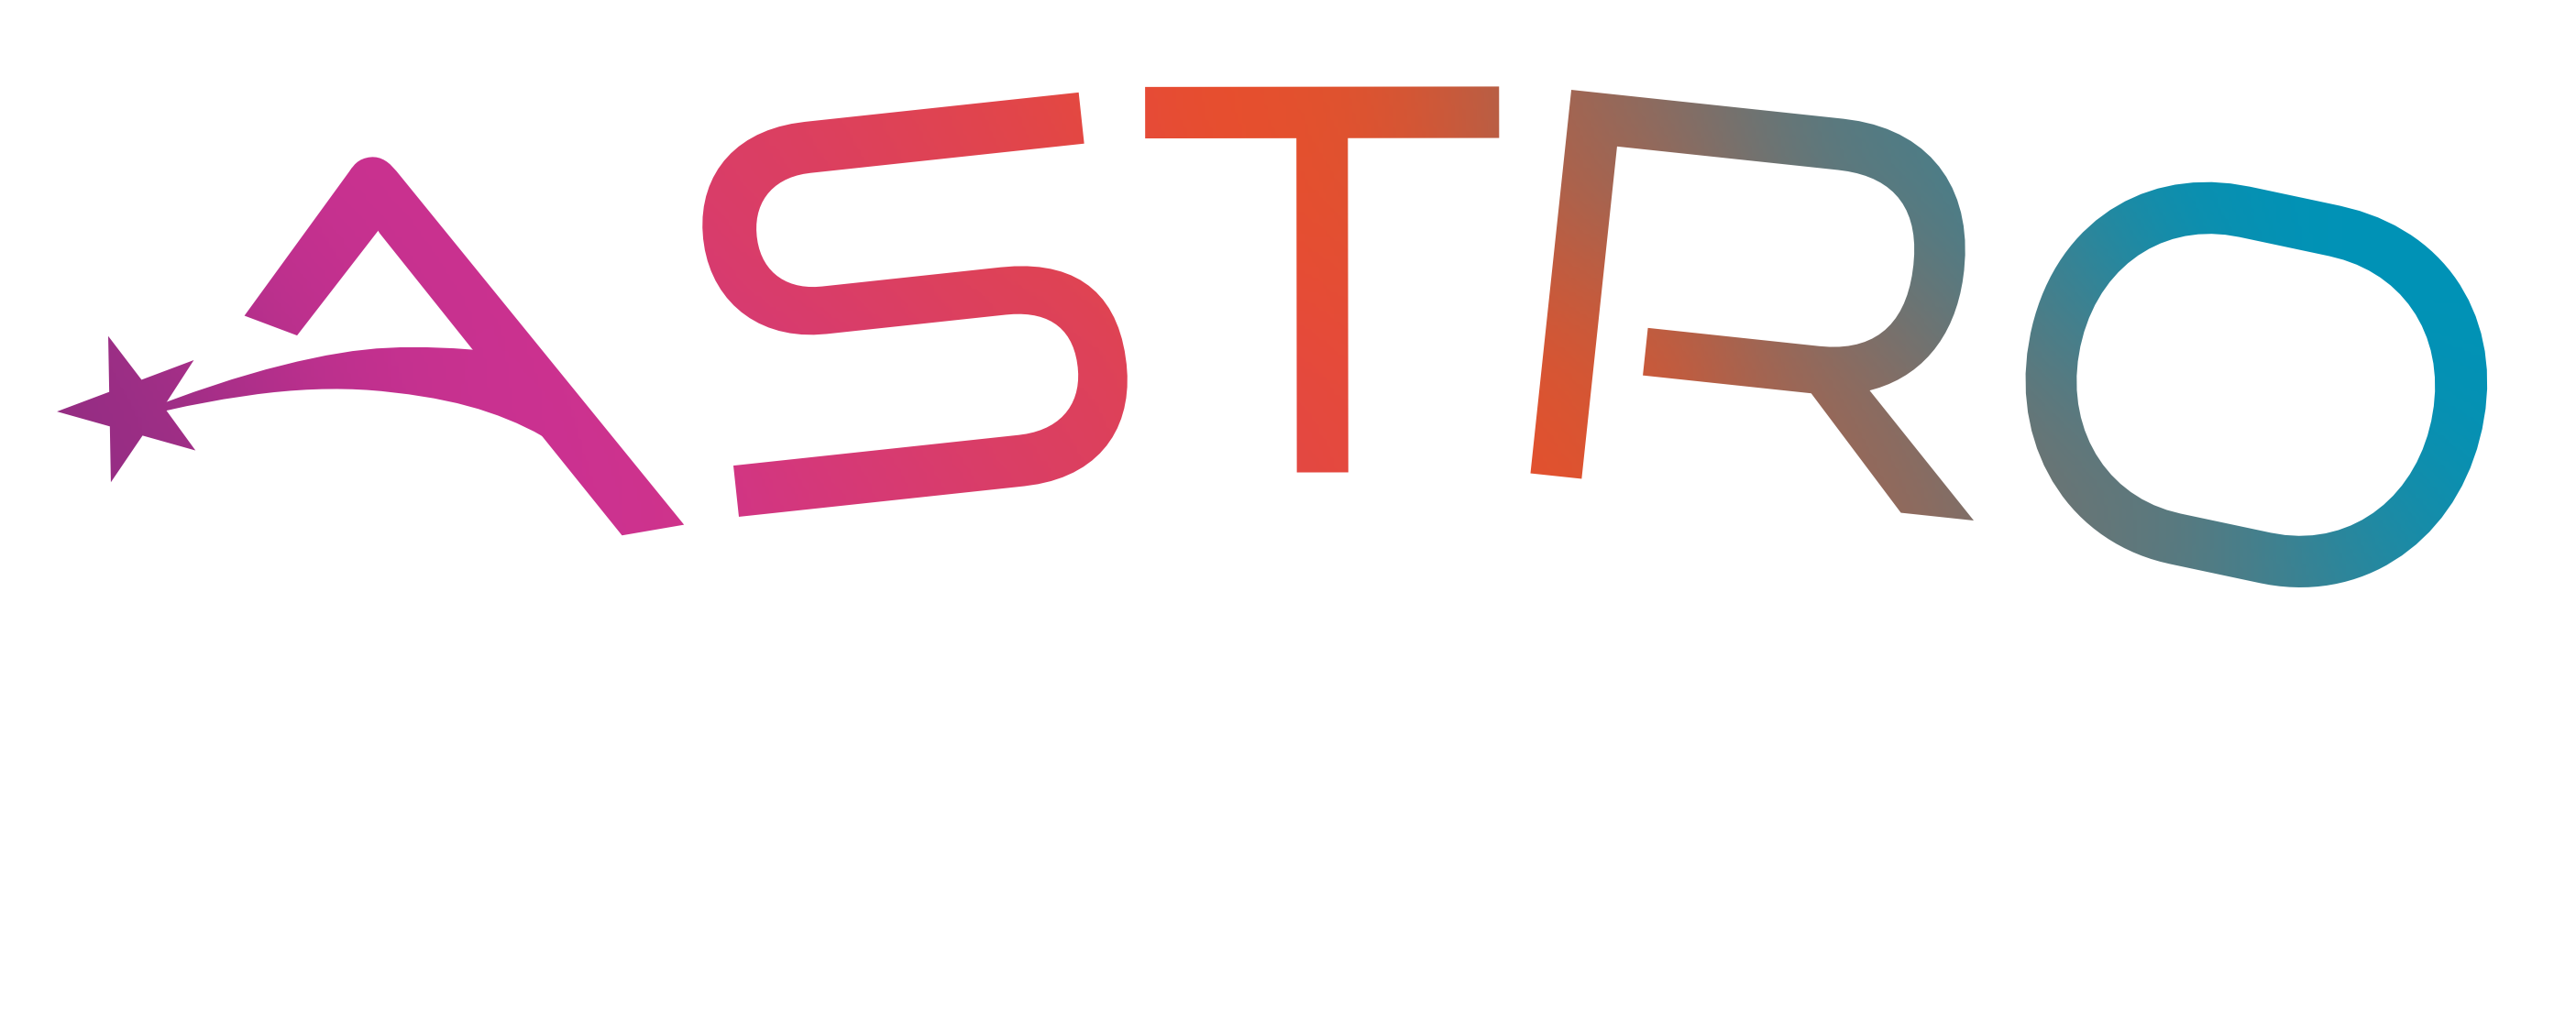 Astro Event Company Logo